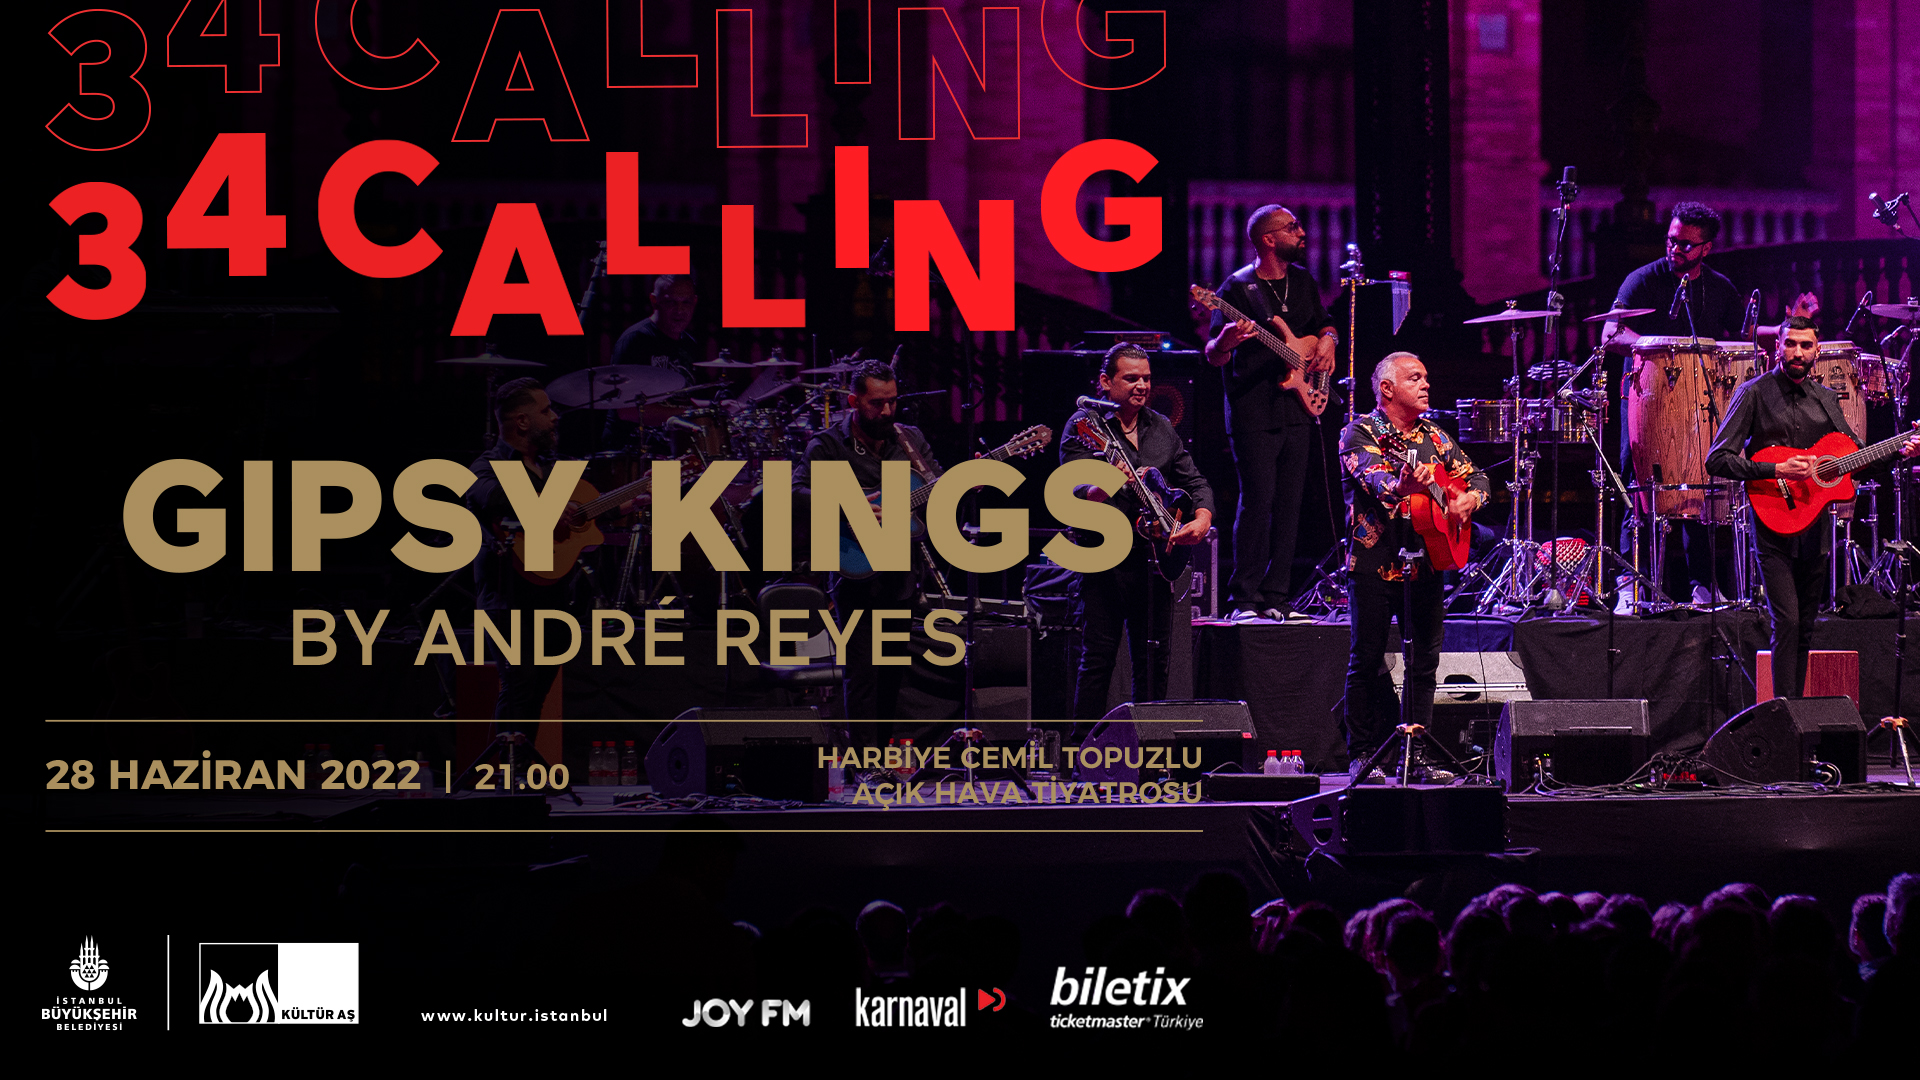 Gipsy Kings by André Reyes konserinin biletleri Biletix’te